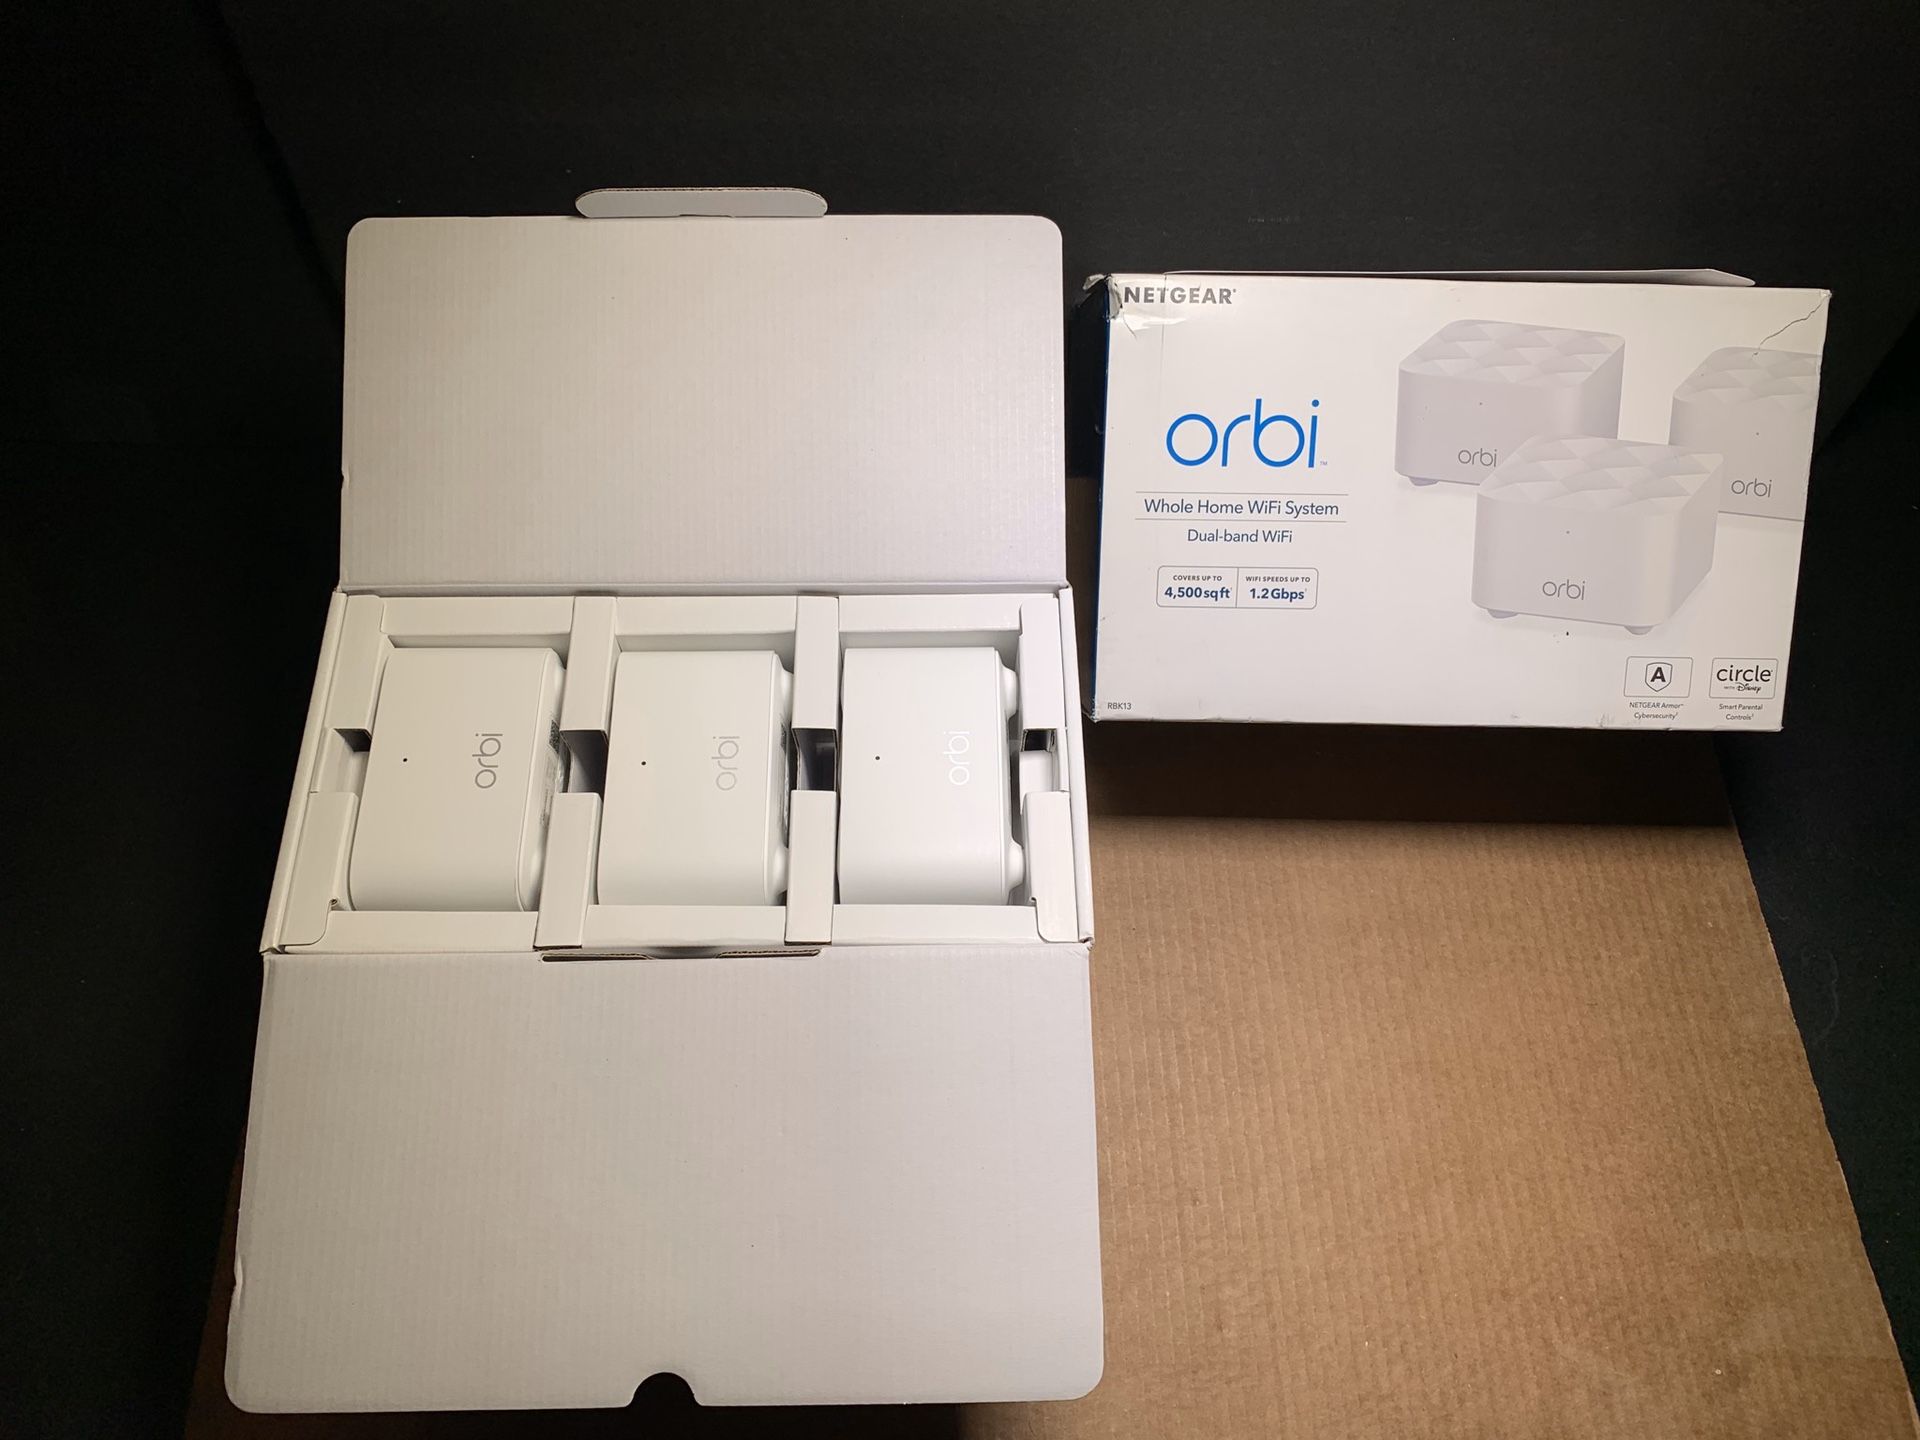 NETGEAR Orbi Whole Home WiFi System Dual Band WiFi RBK13-100NAS, New